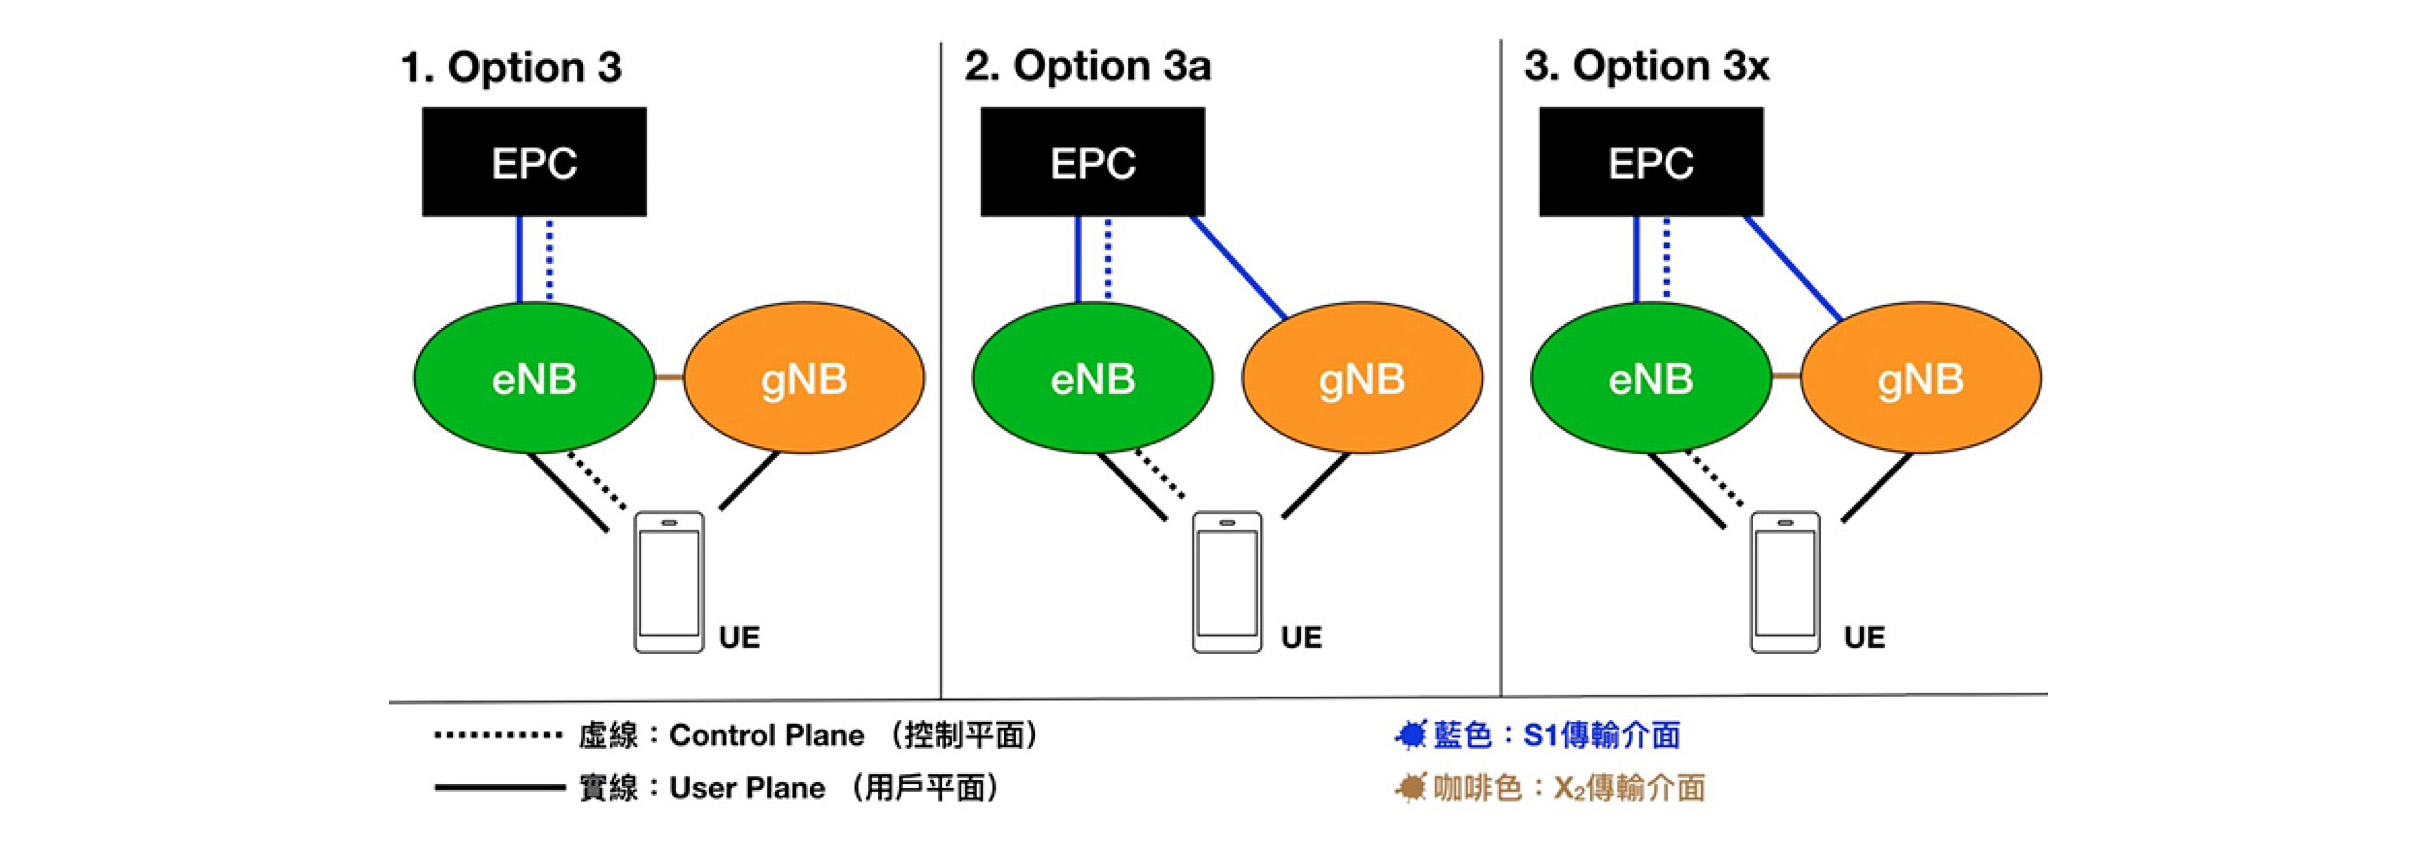 5G NSA Option 3之網路架構